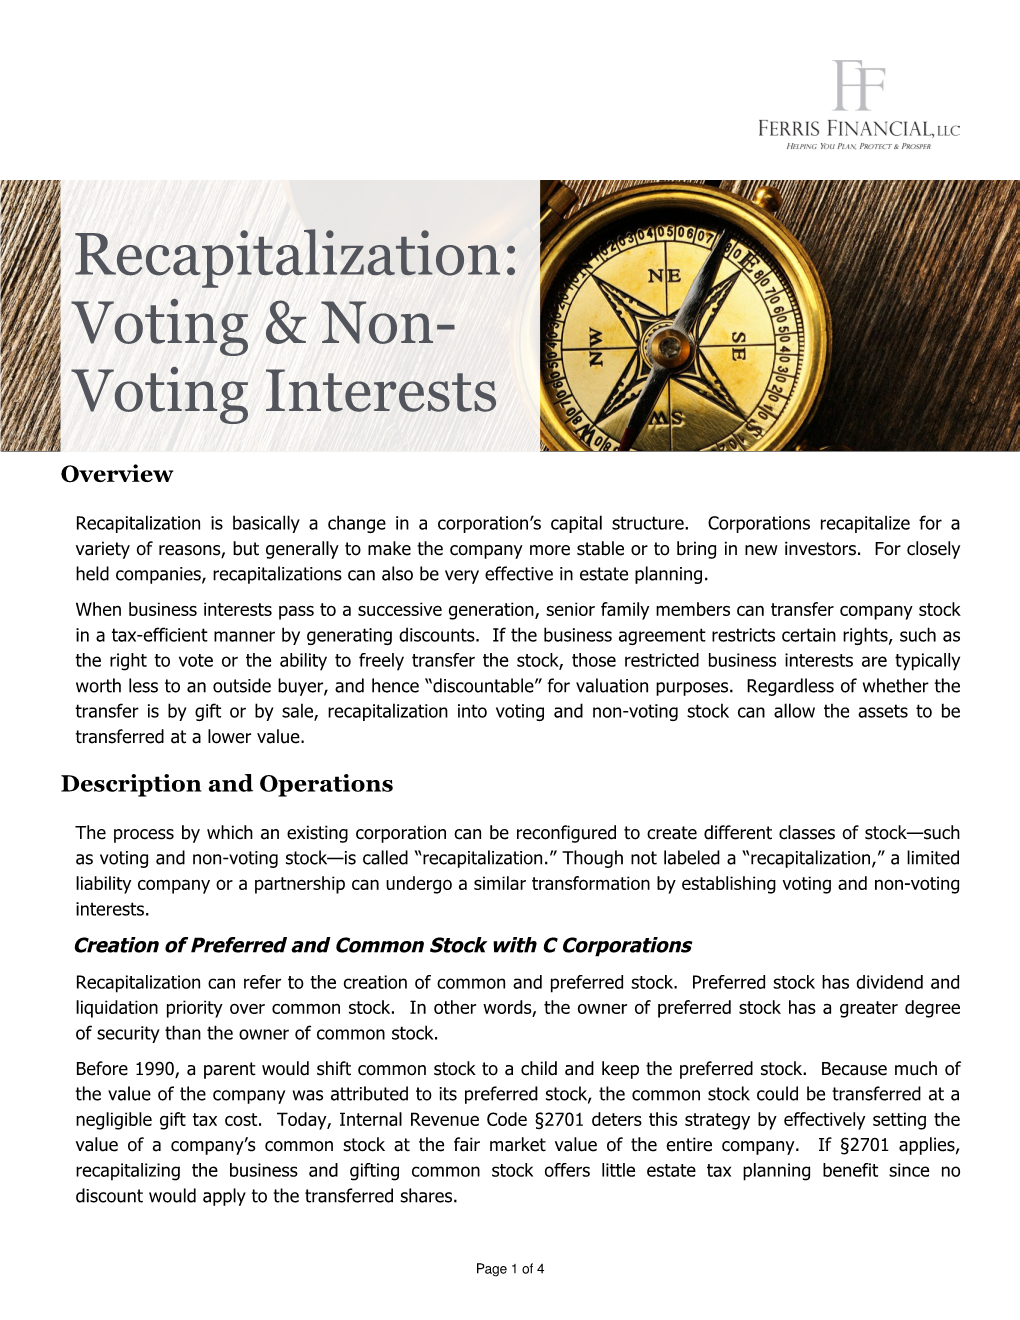 Recapitalization: Voting & Non- Voting Interests